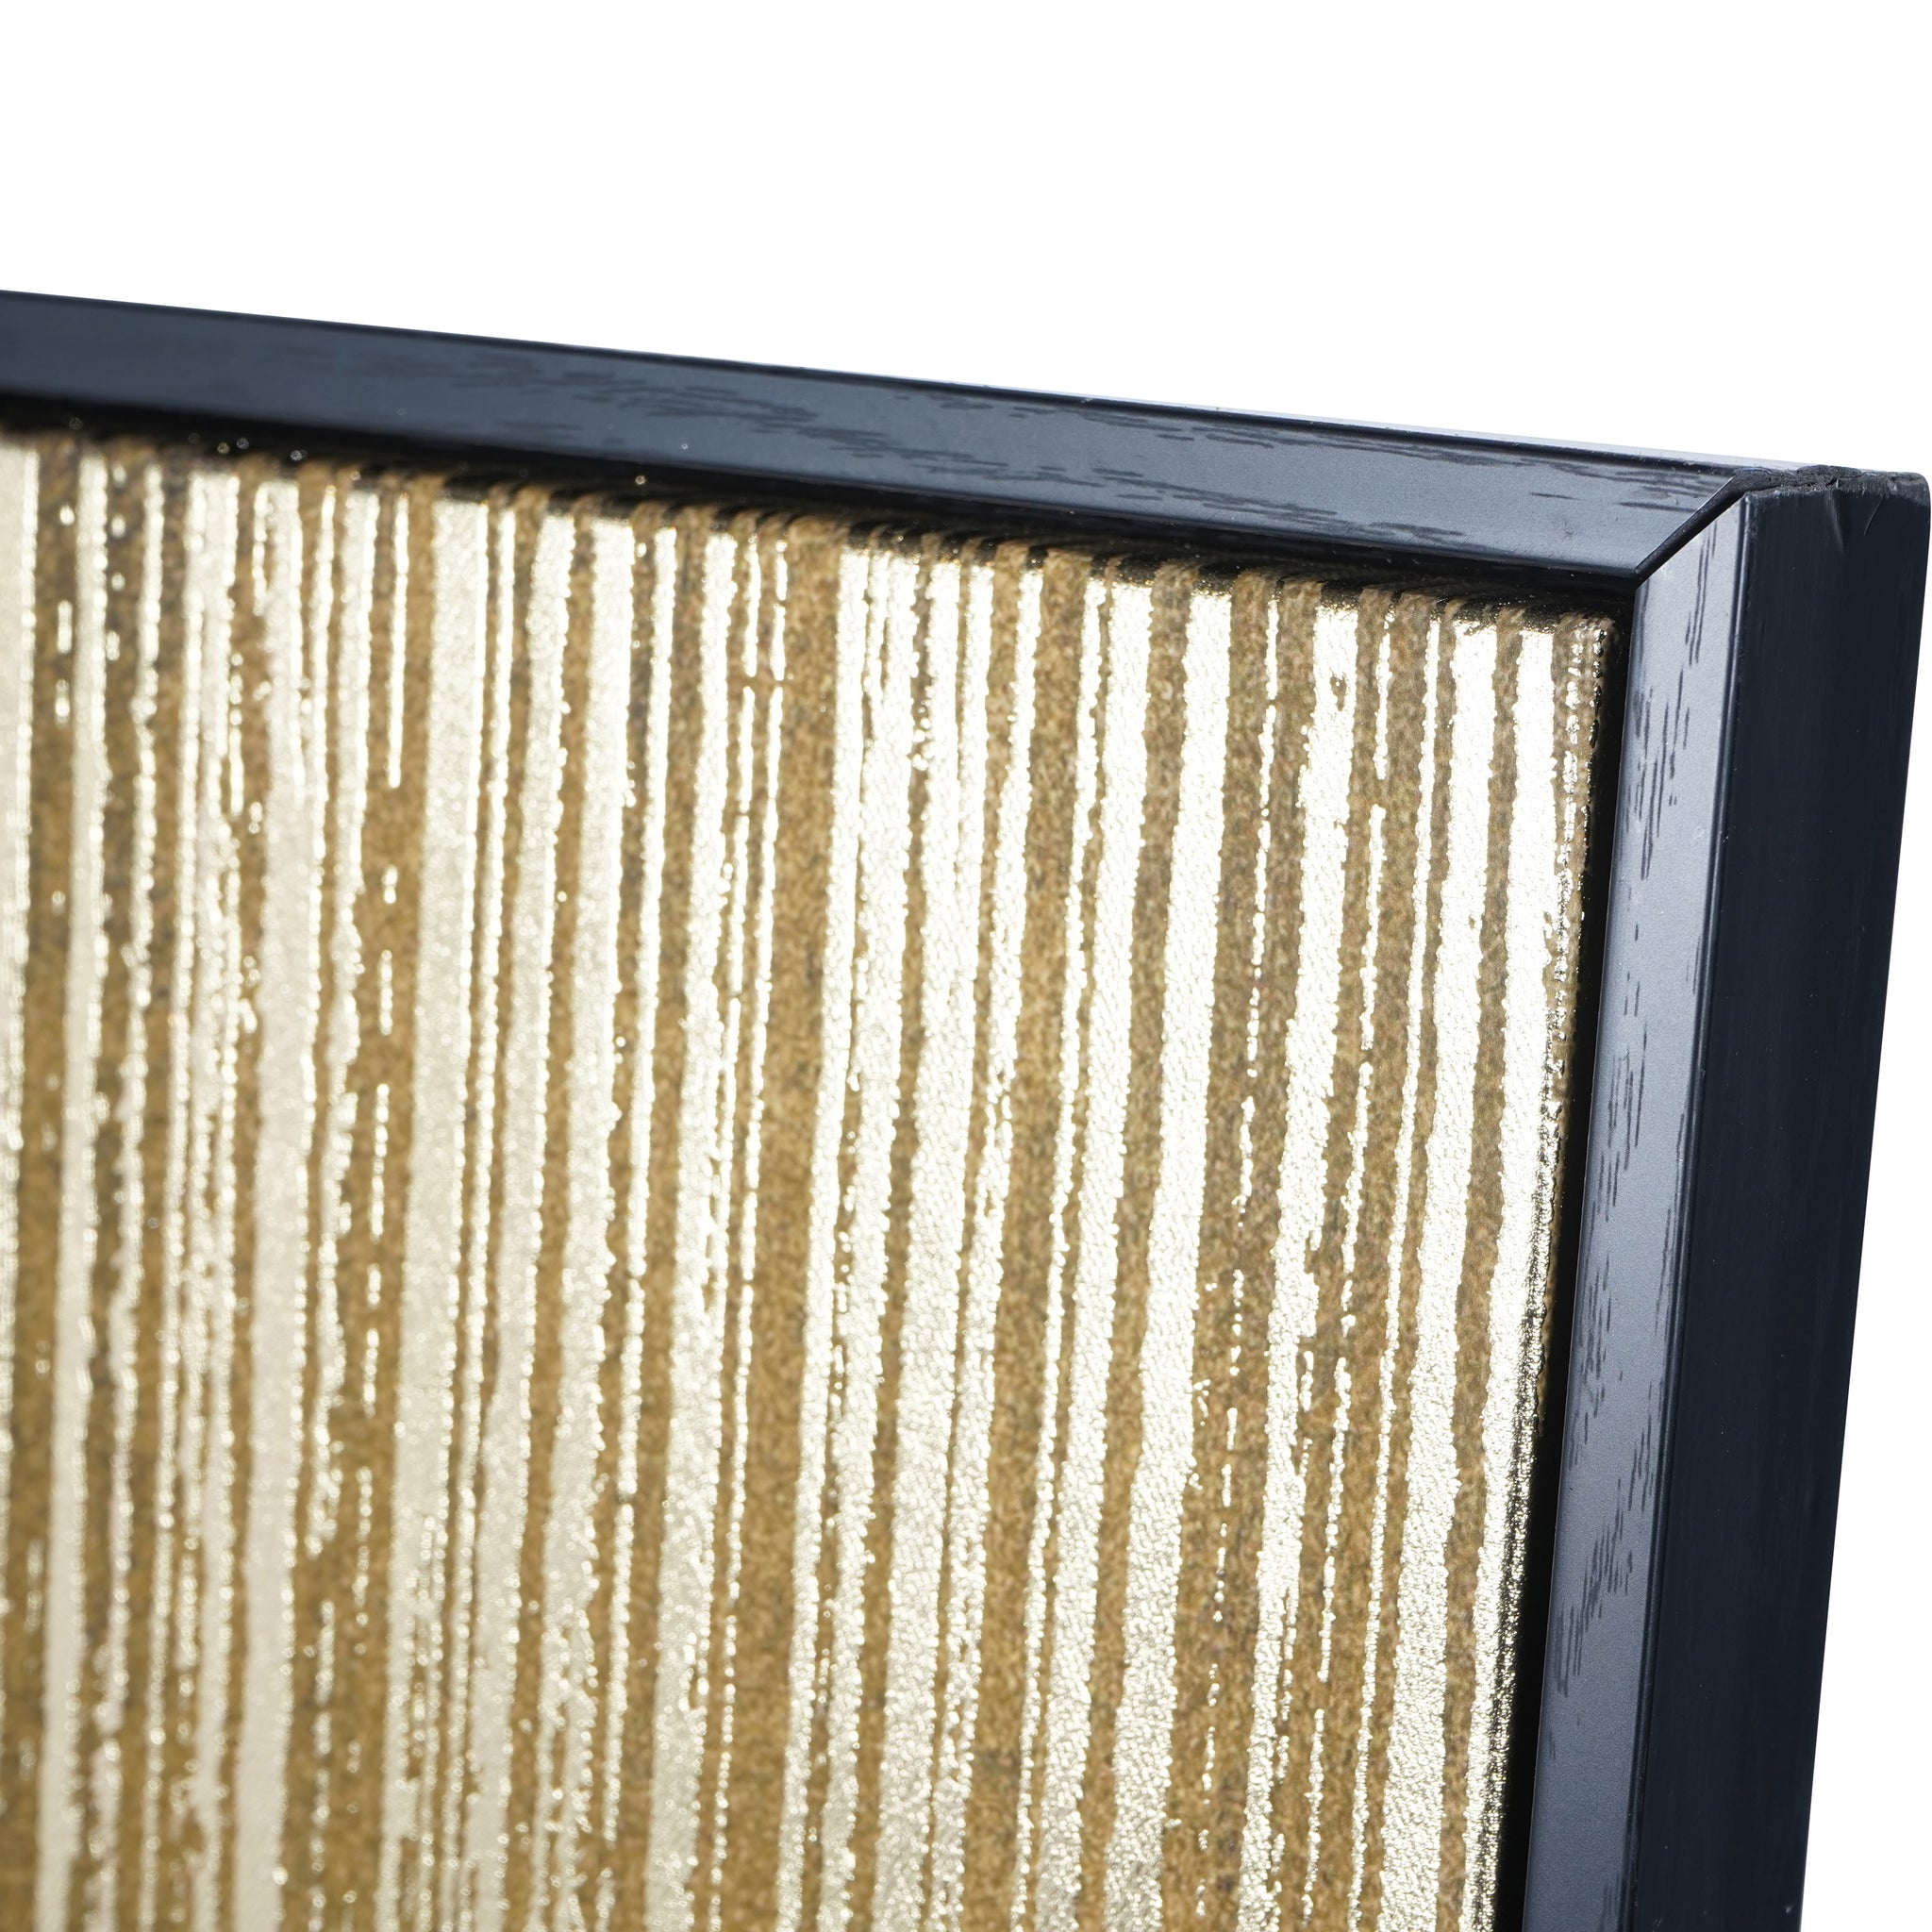 Golden Rain Foil Framed Canvas 140x100cm